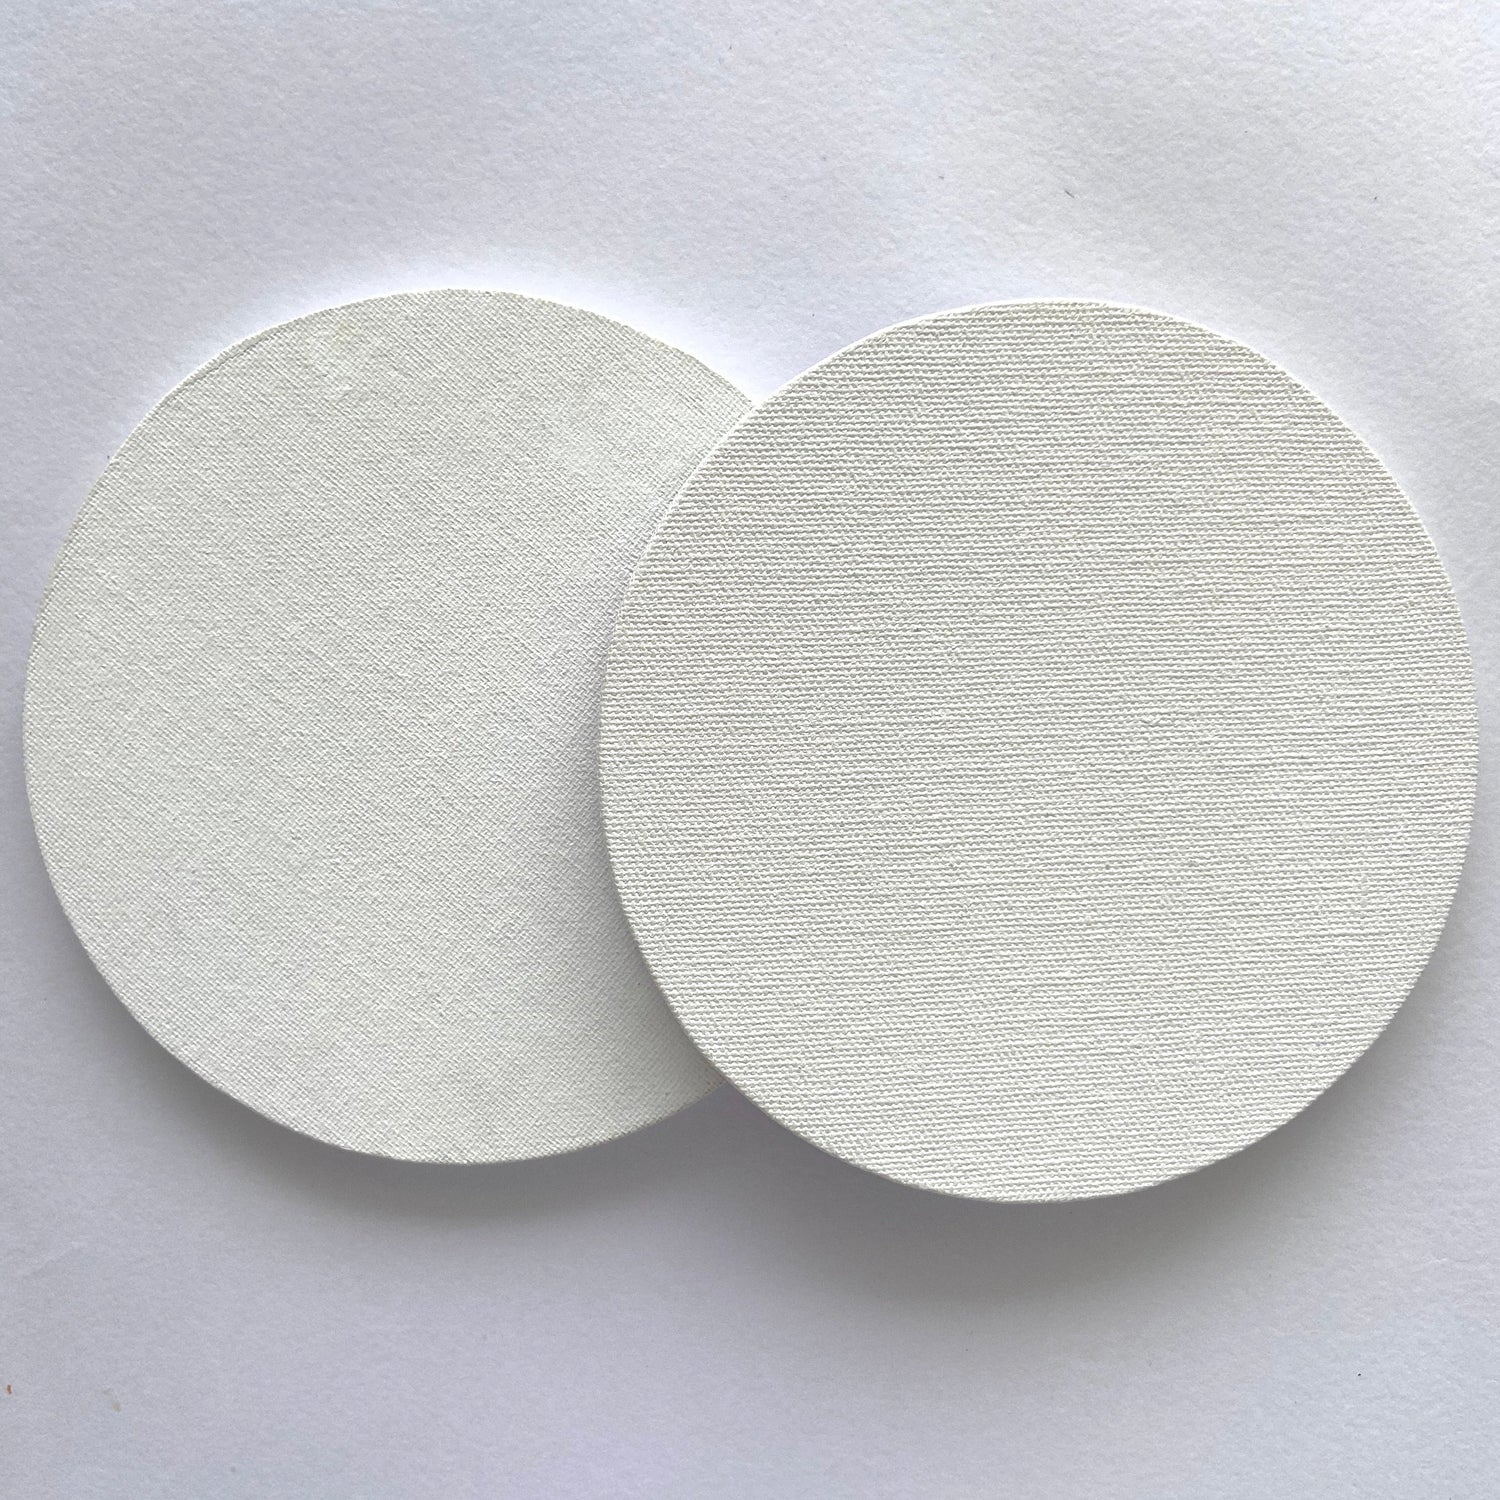 10/12” - 1 Medium size canvas pad – Artyshils Art